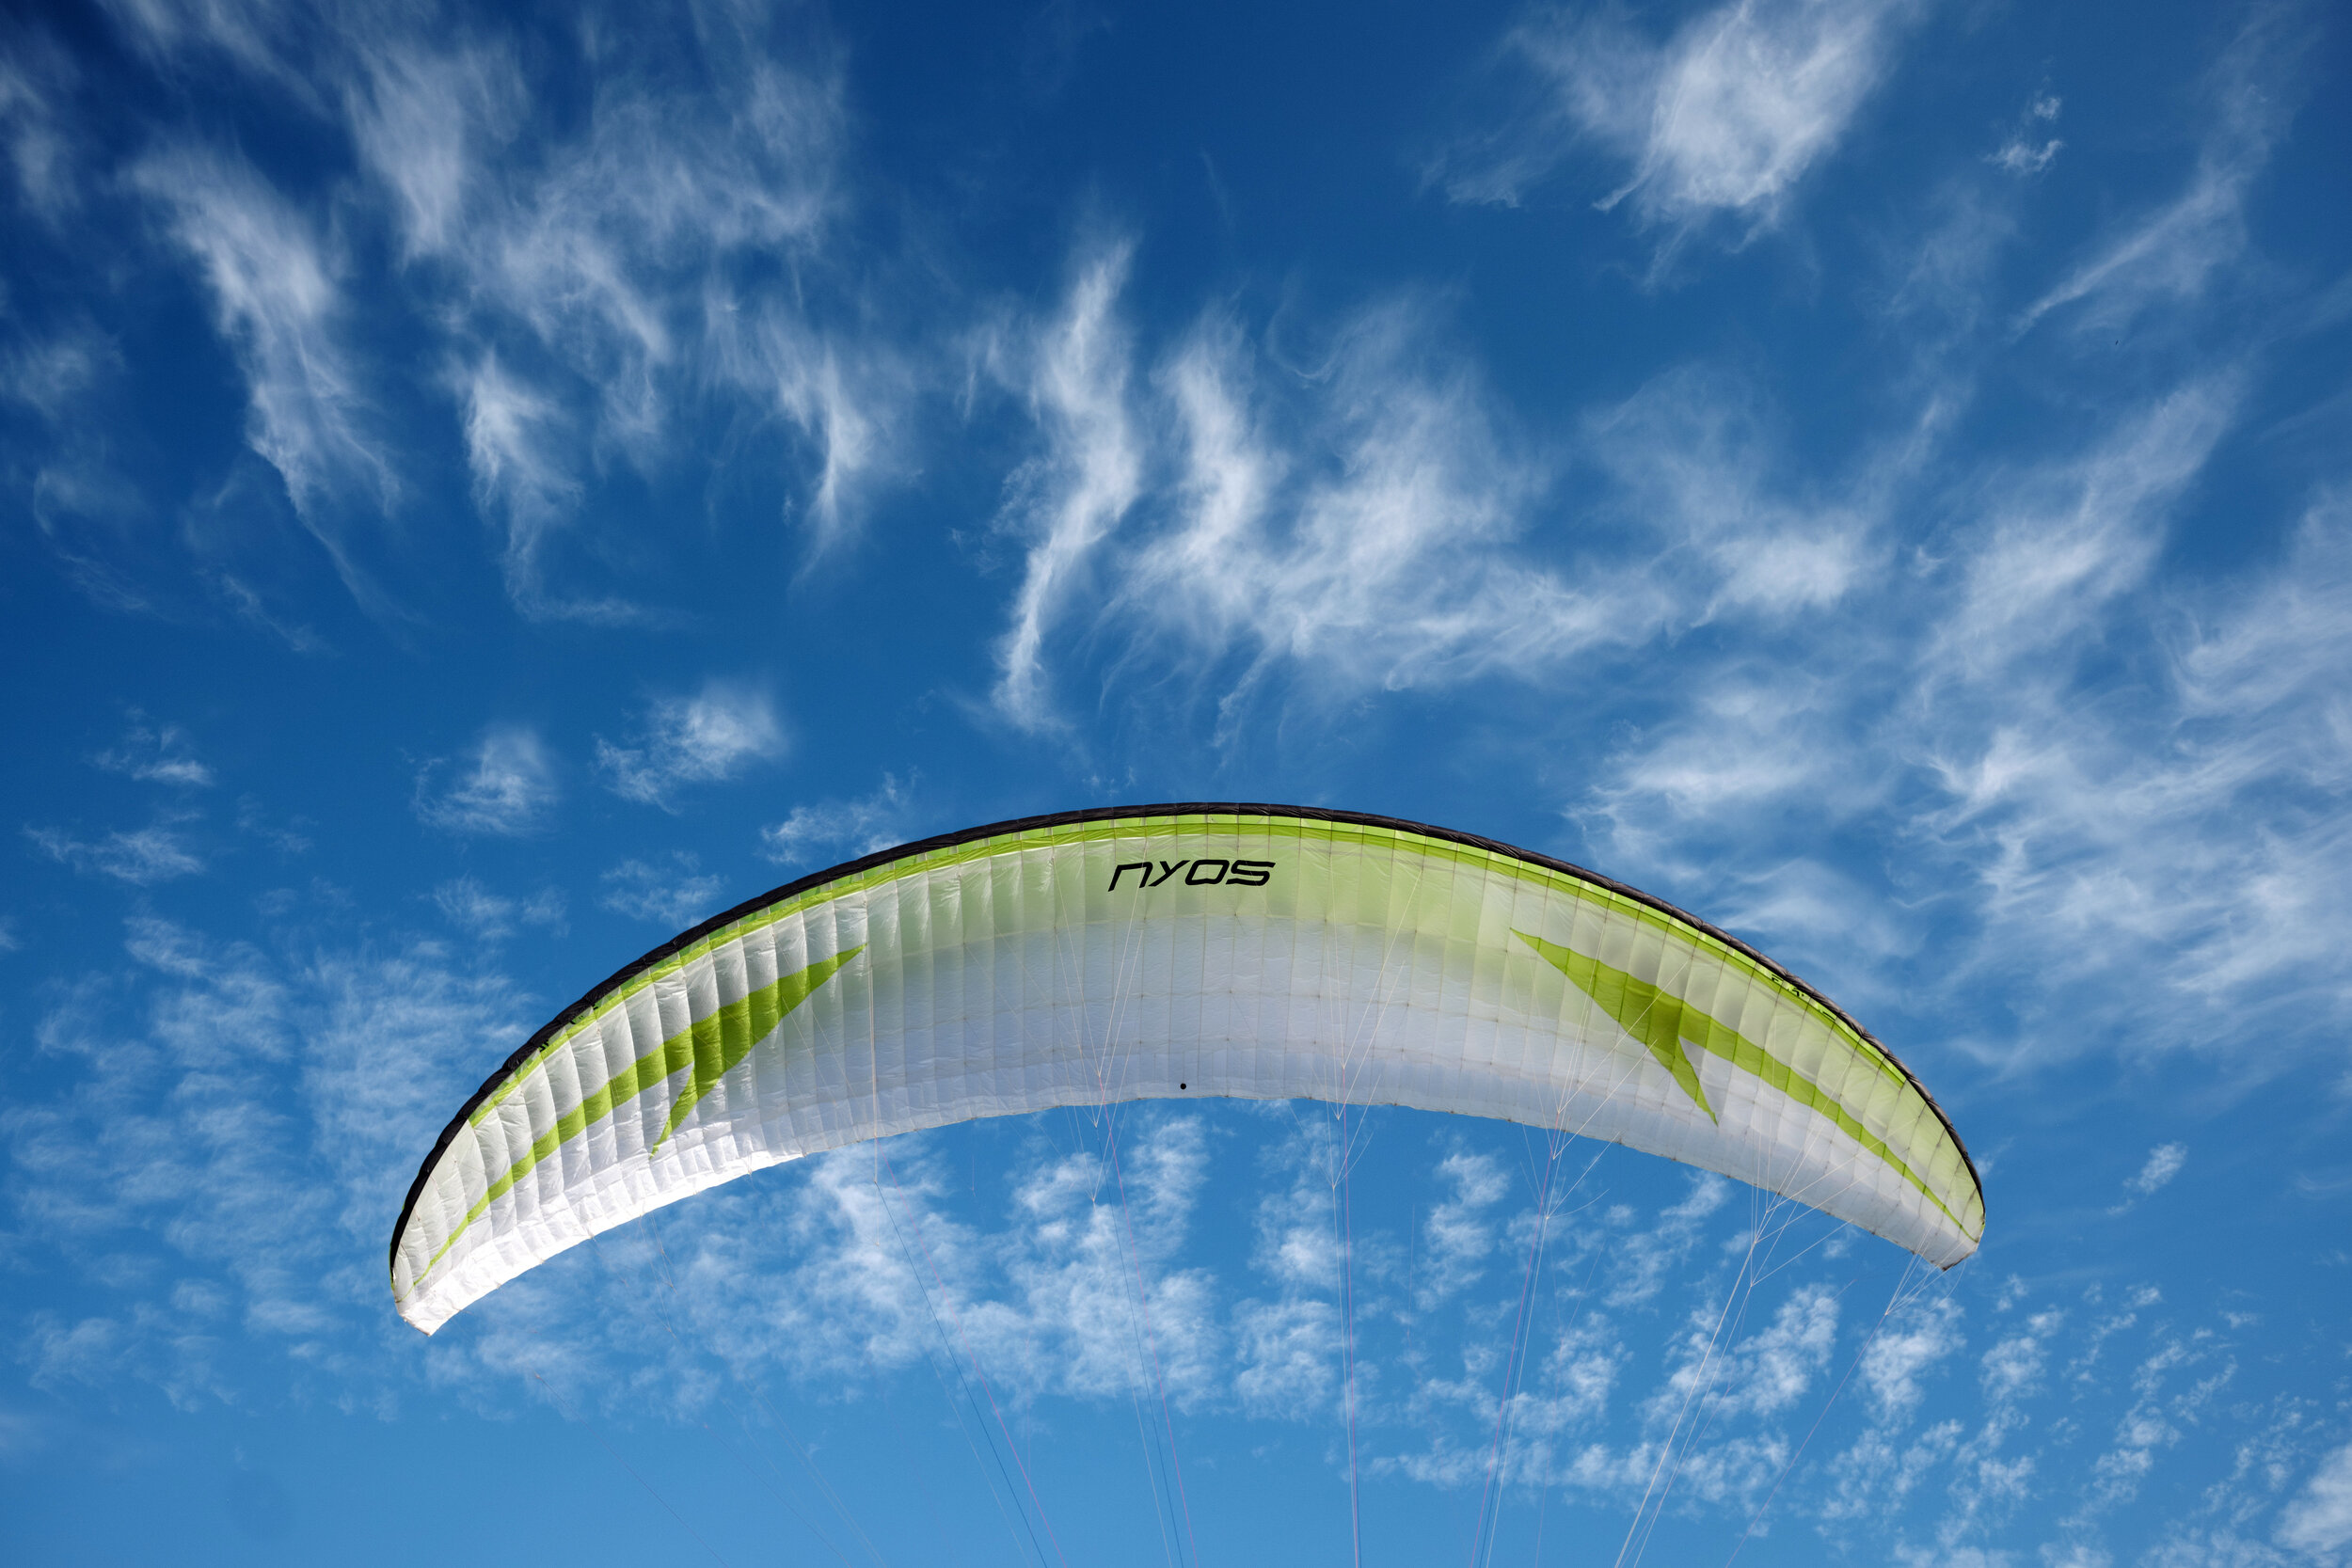 A kite surfer sail hangs over Vanier Park in Kitsilano, Vancouver